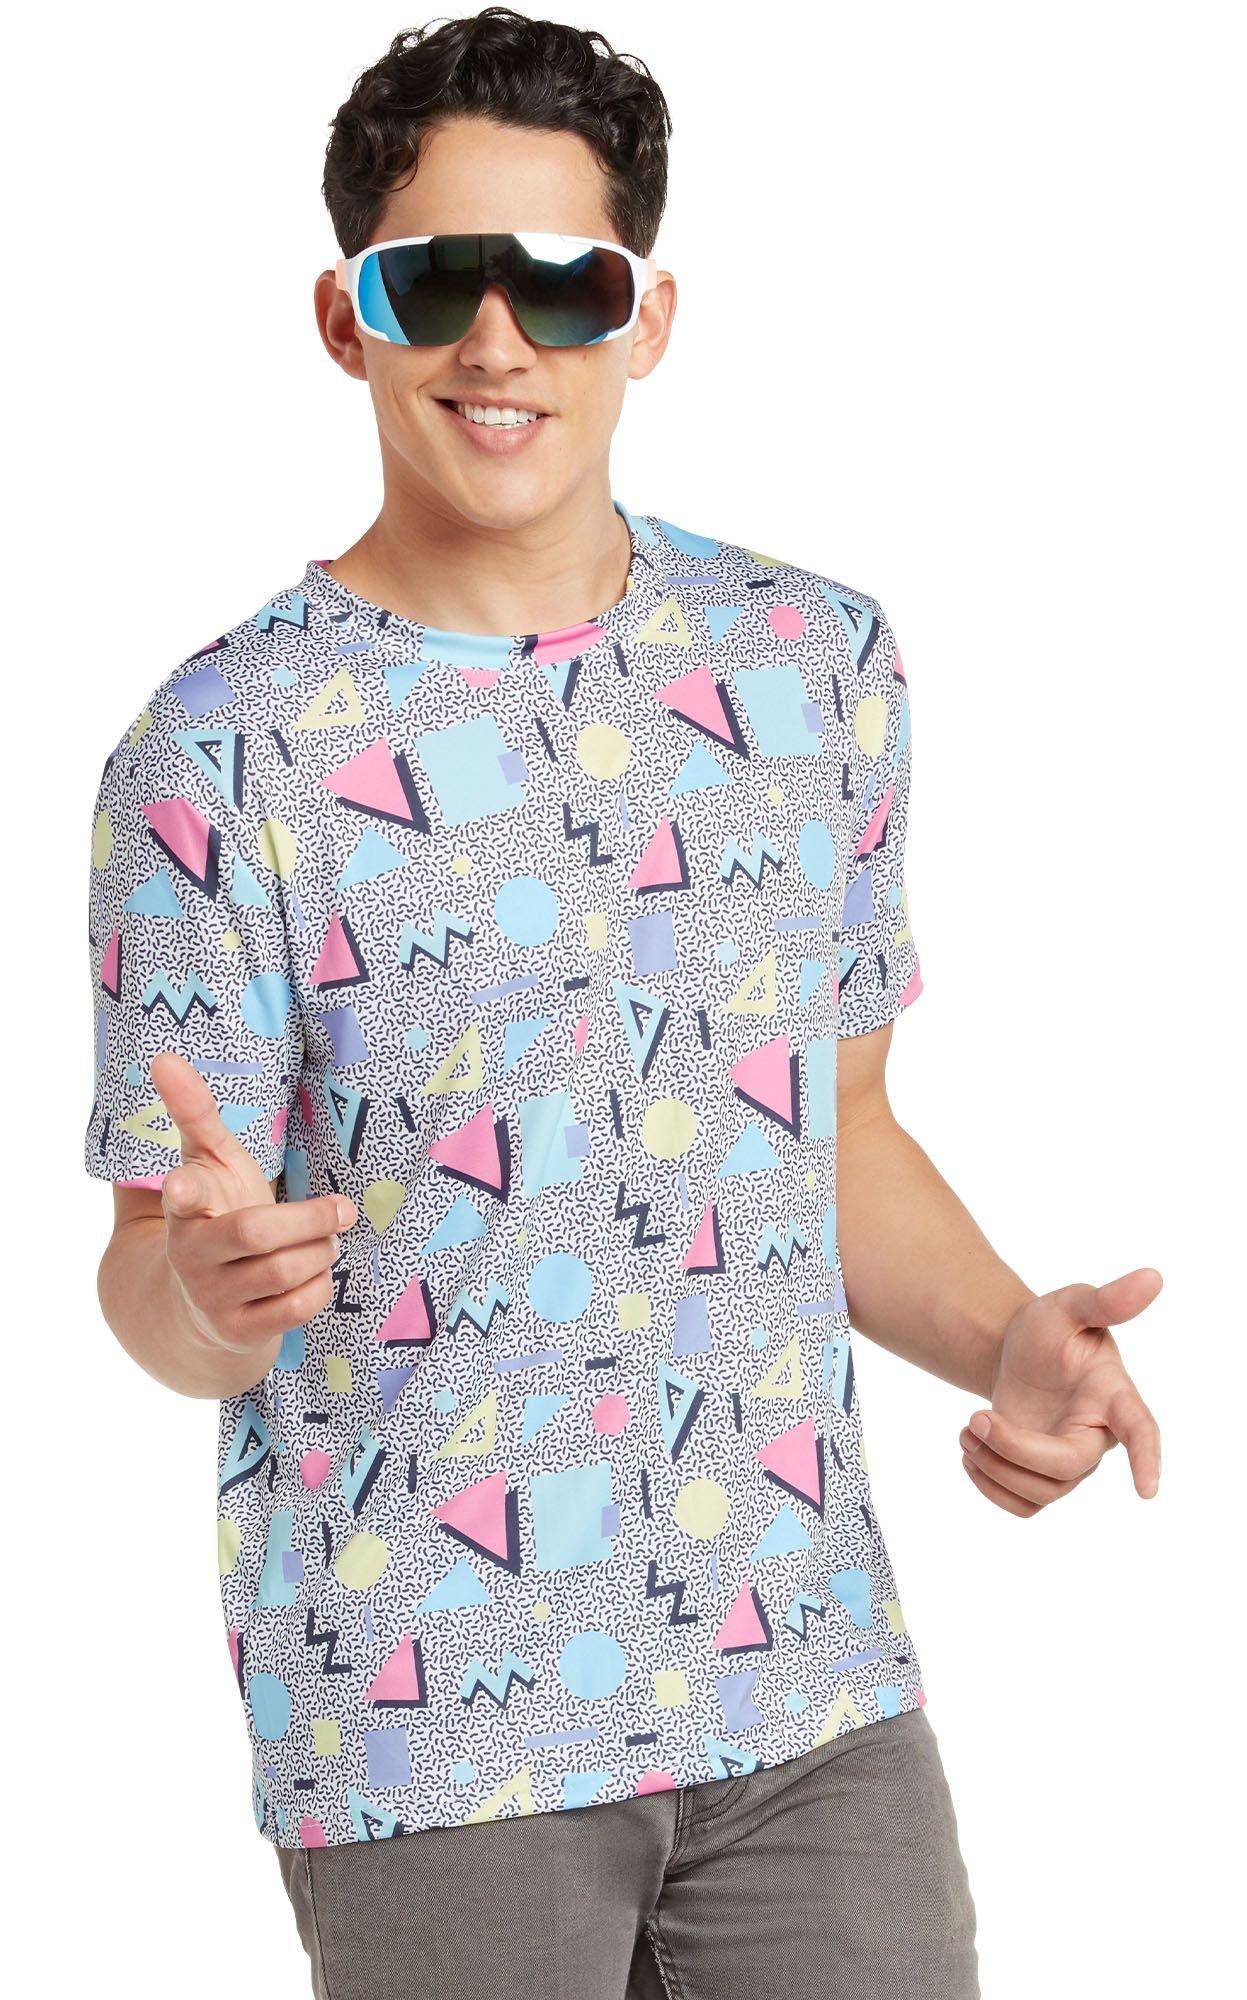 I Love LV Raider Shirt - Trend Tee Shirts Store